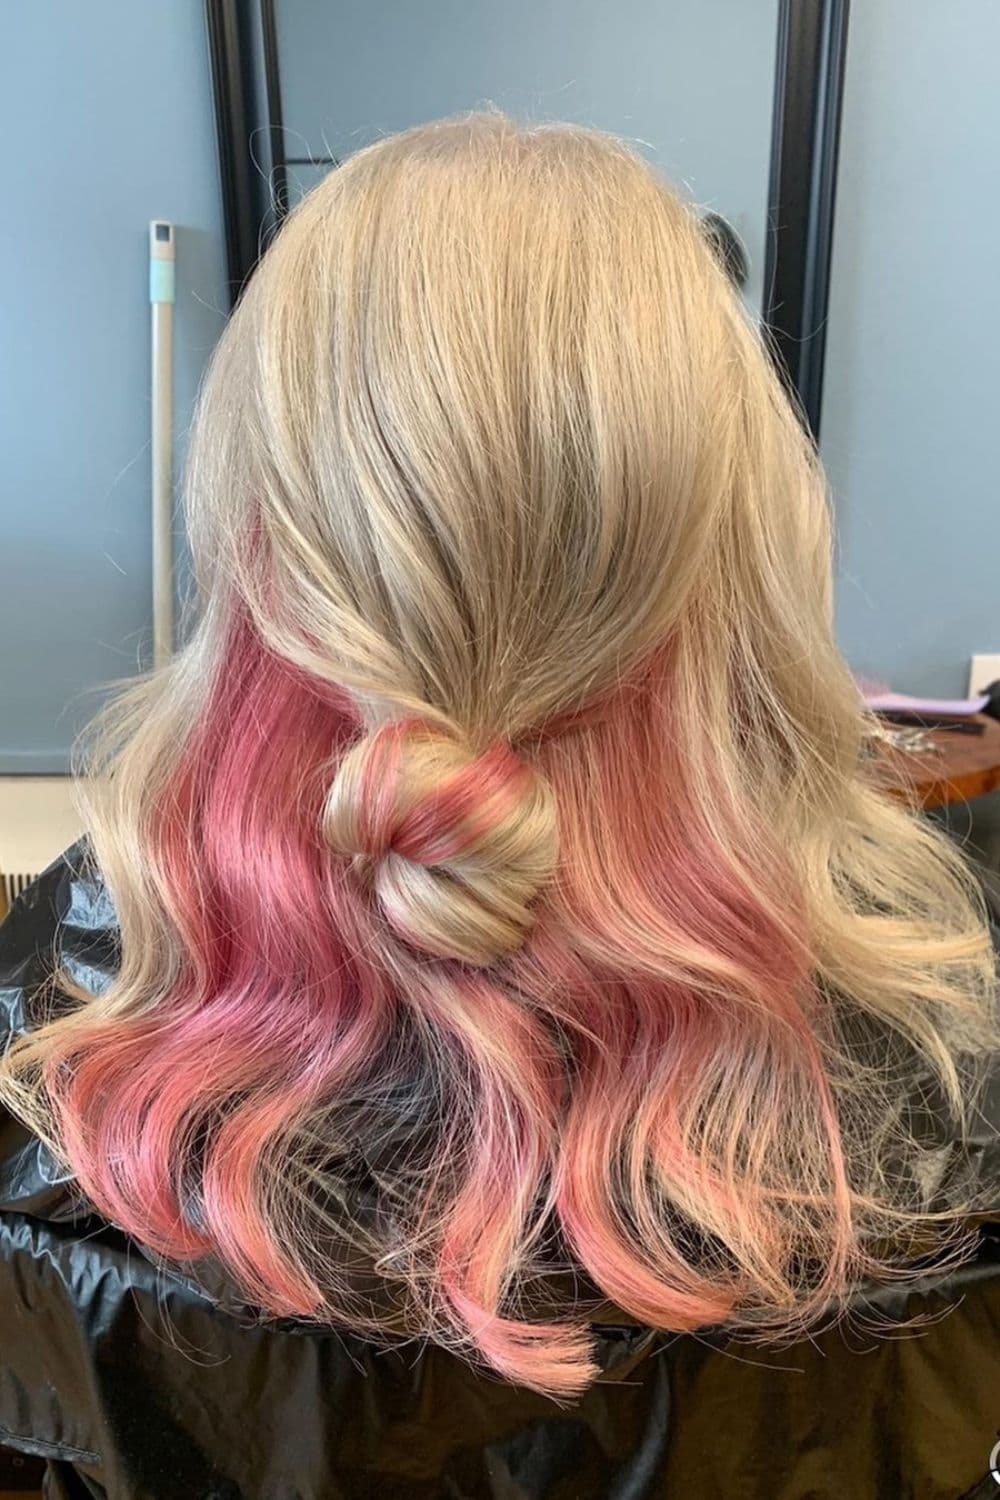 A woman with long blonde hair and pink peekaboo balayage.